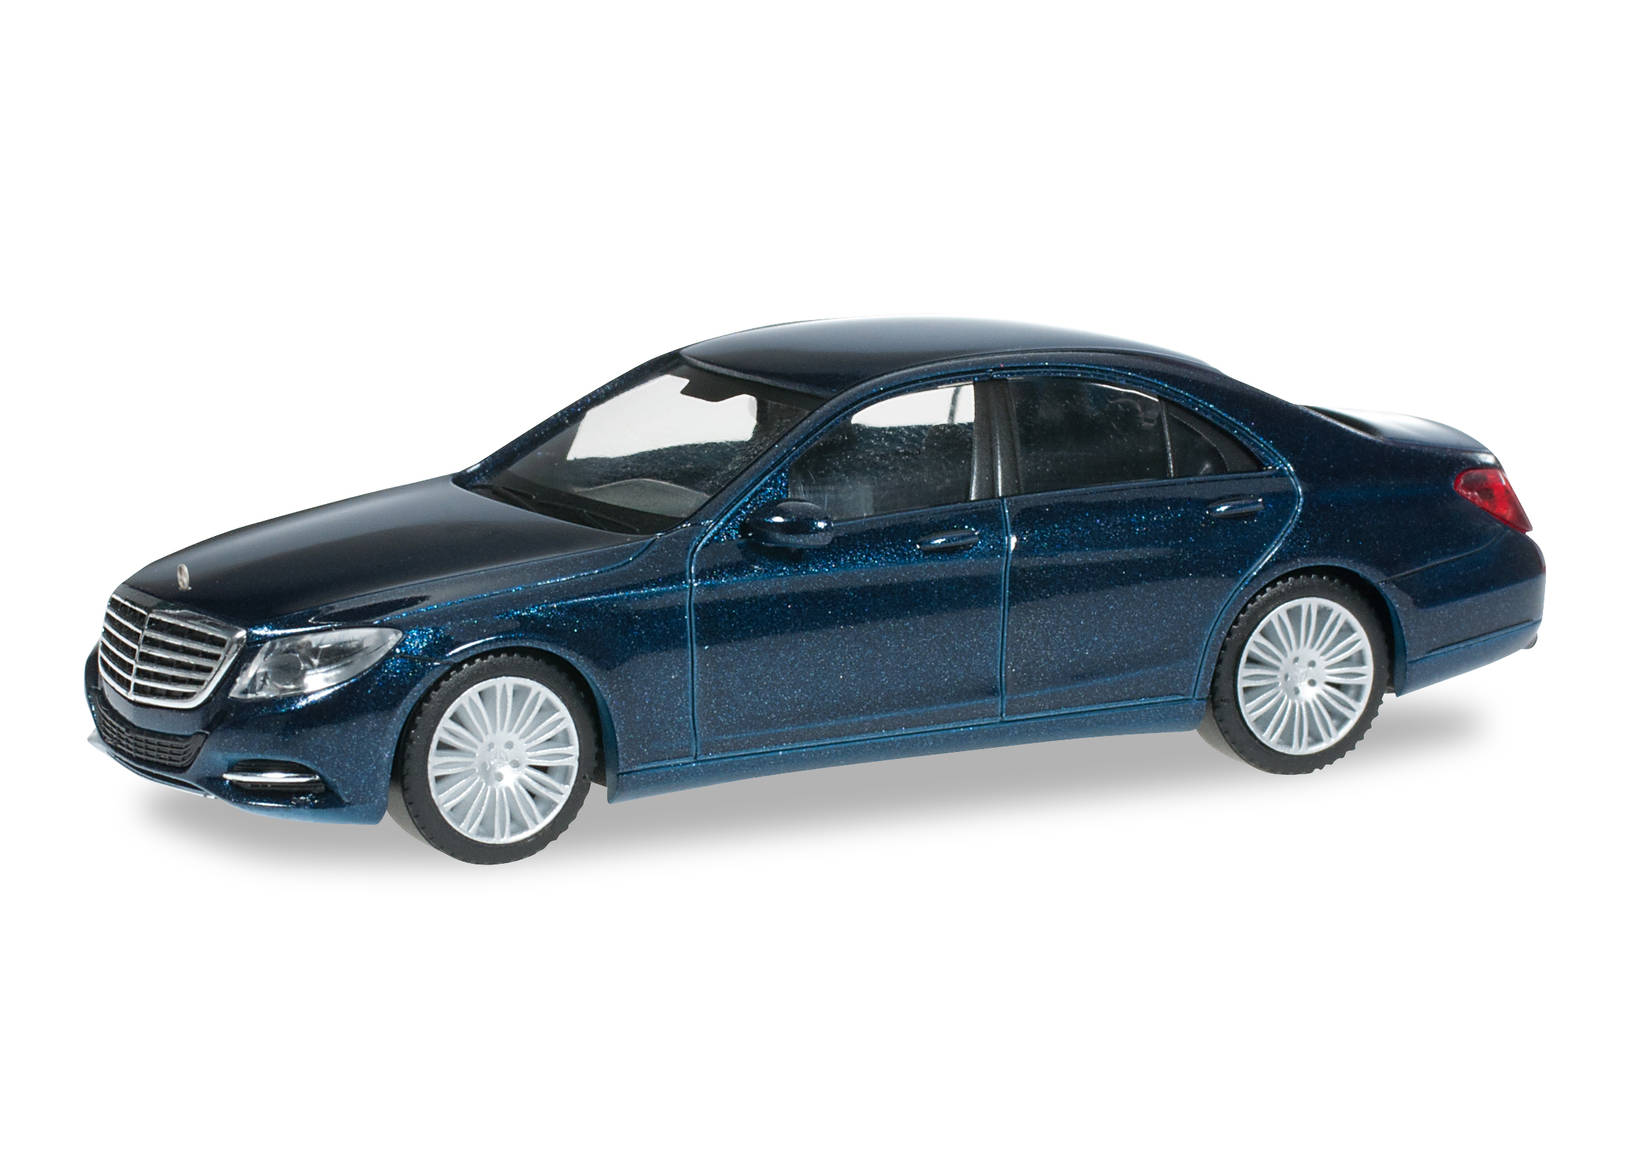 Mercedes-Benz S-class, cavansit blue metallic